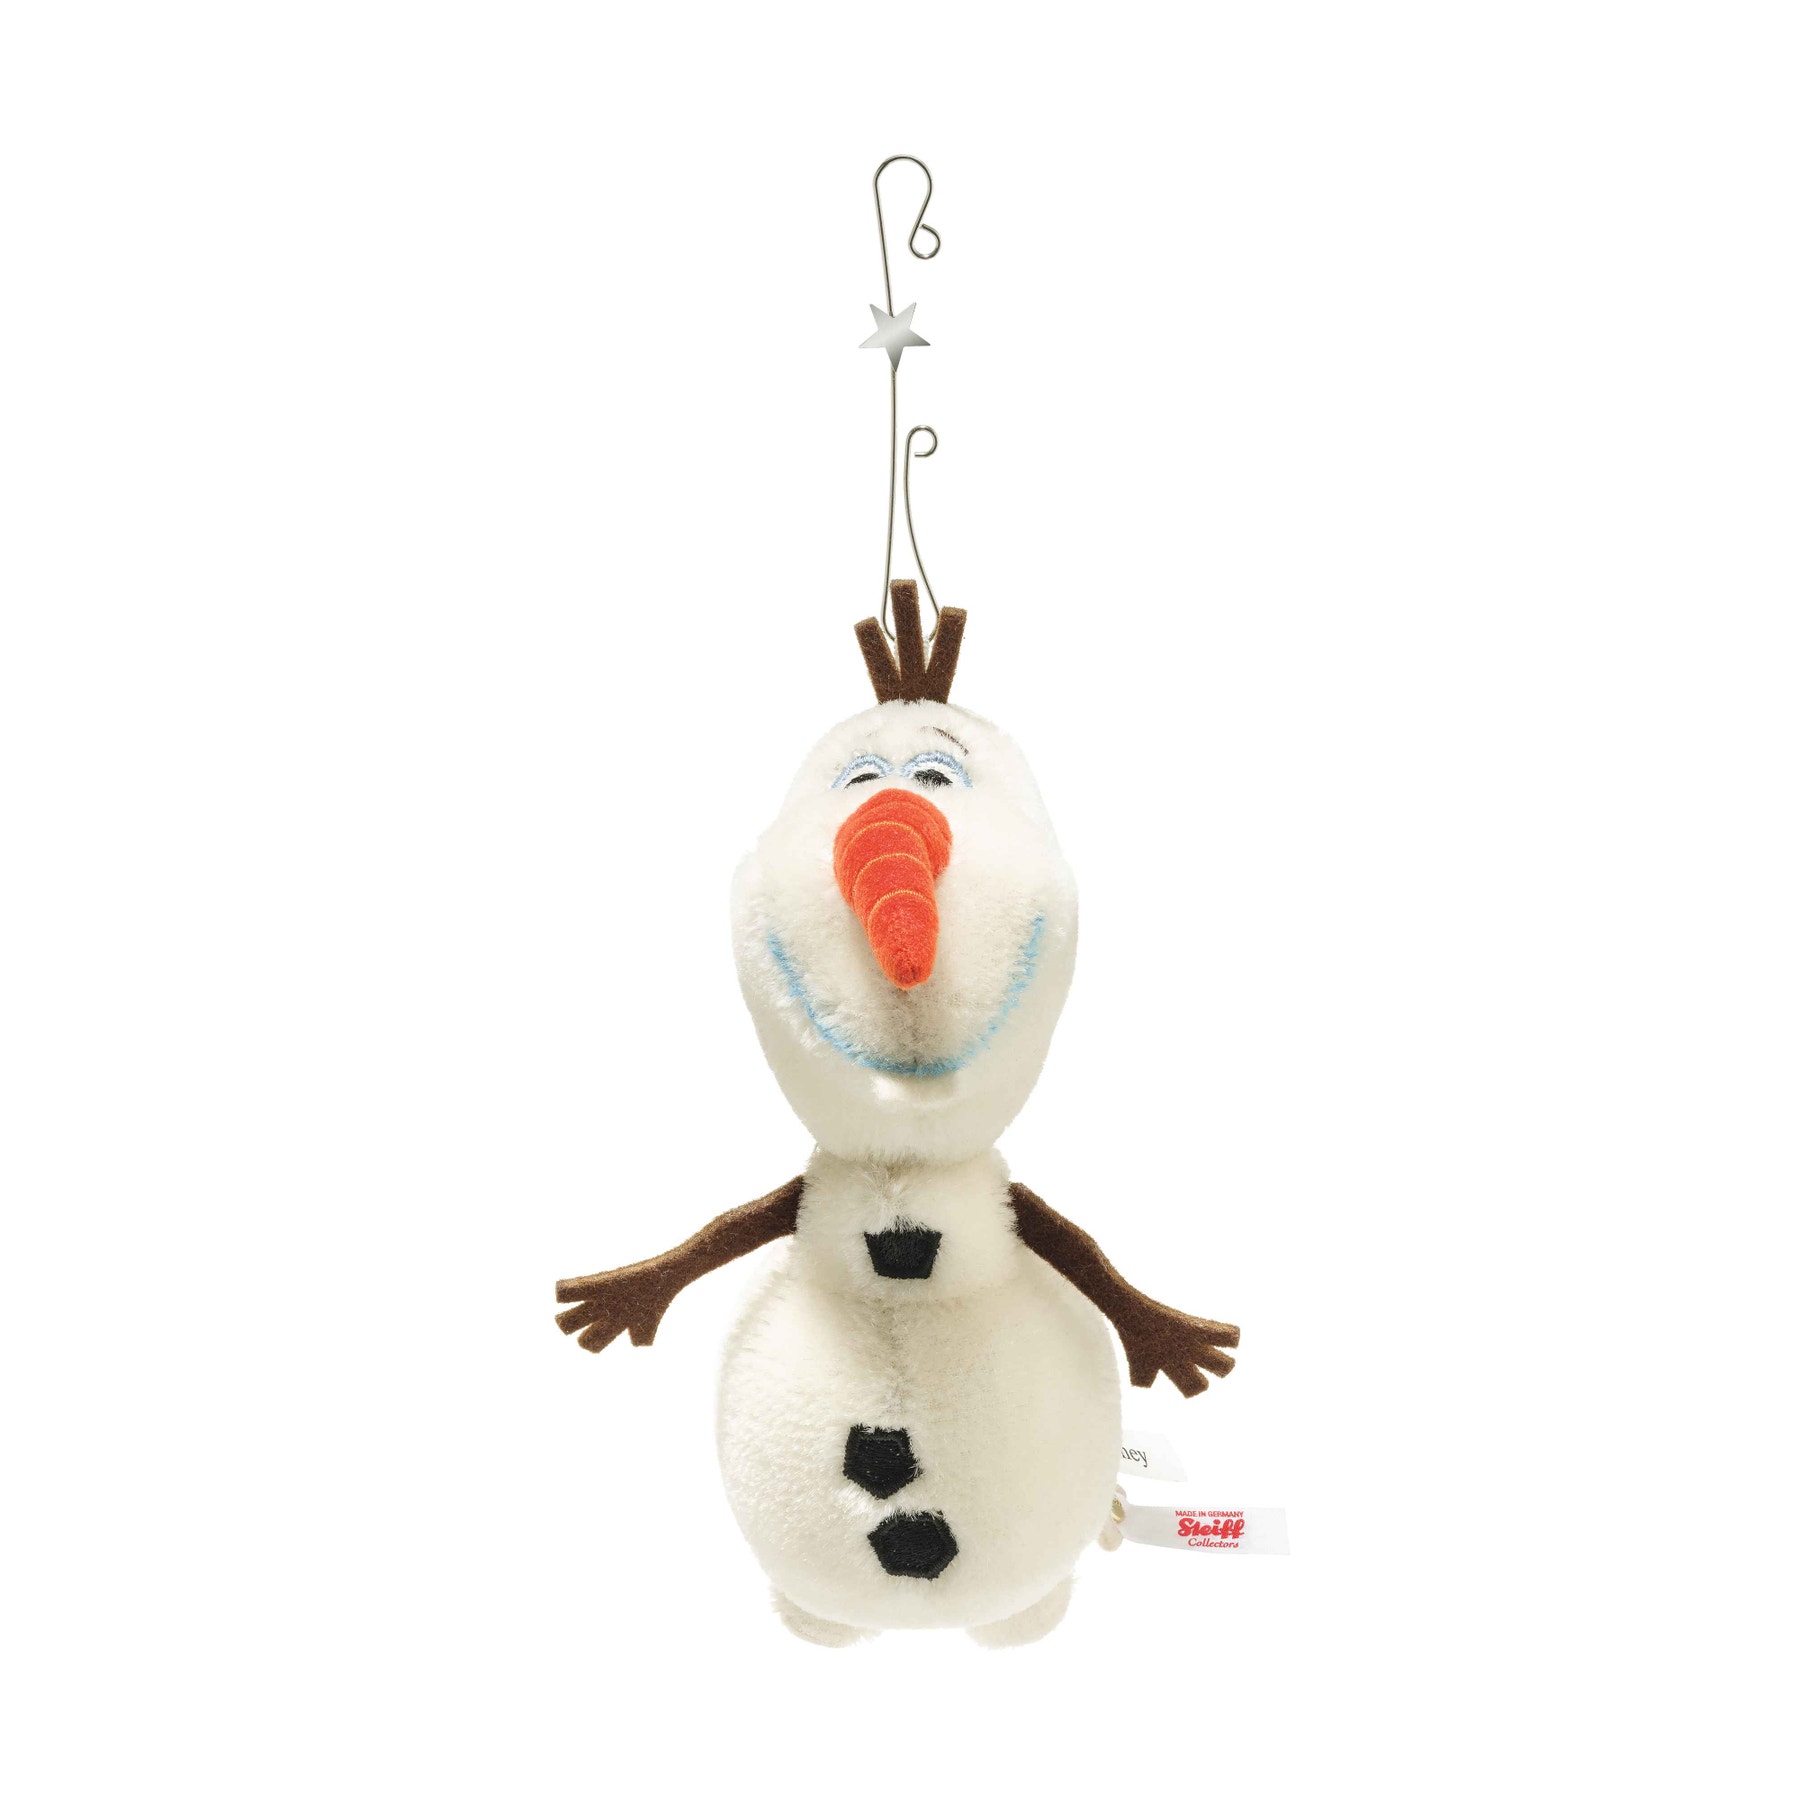 Disney Frozen Olaf ornament